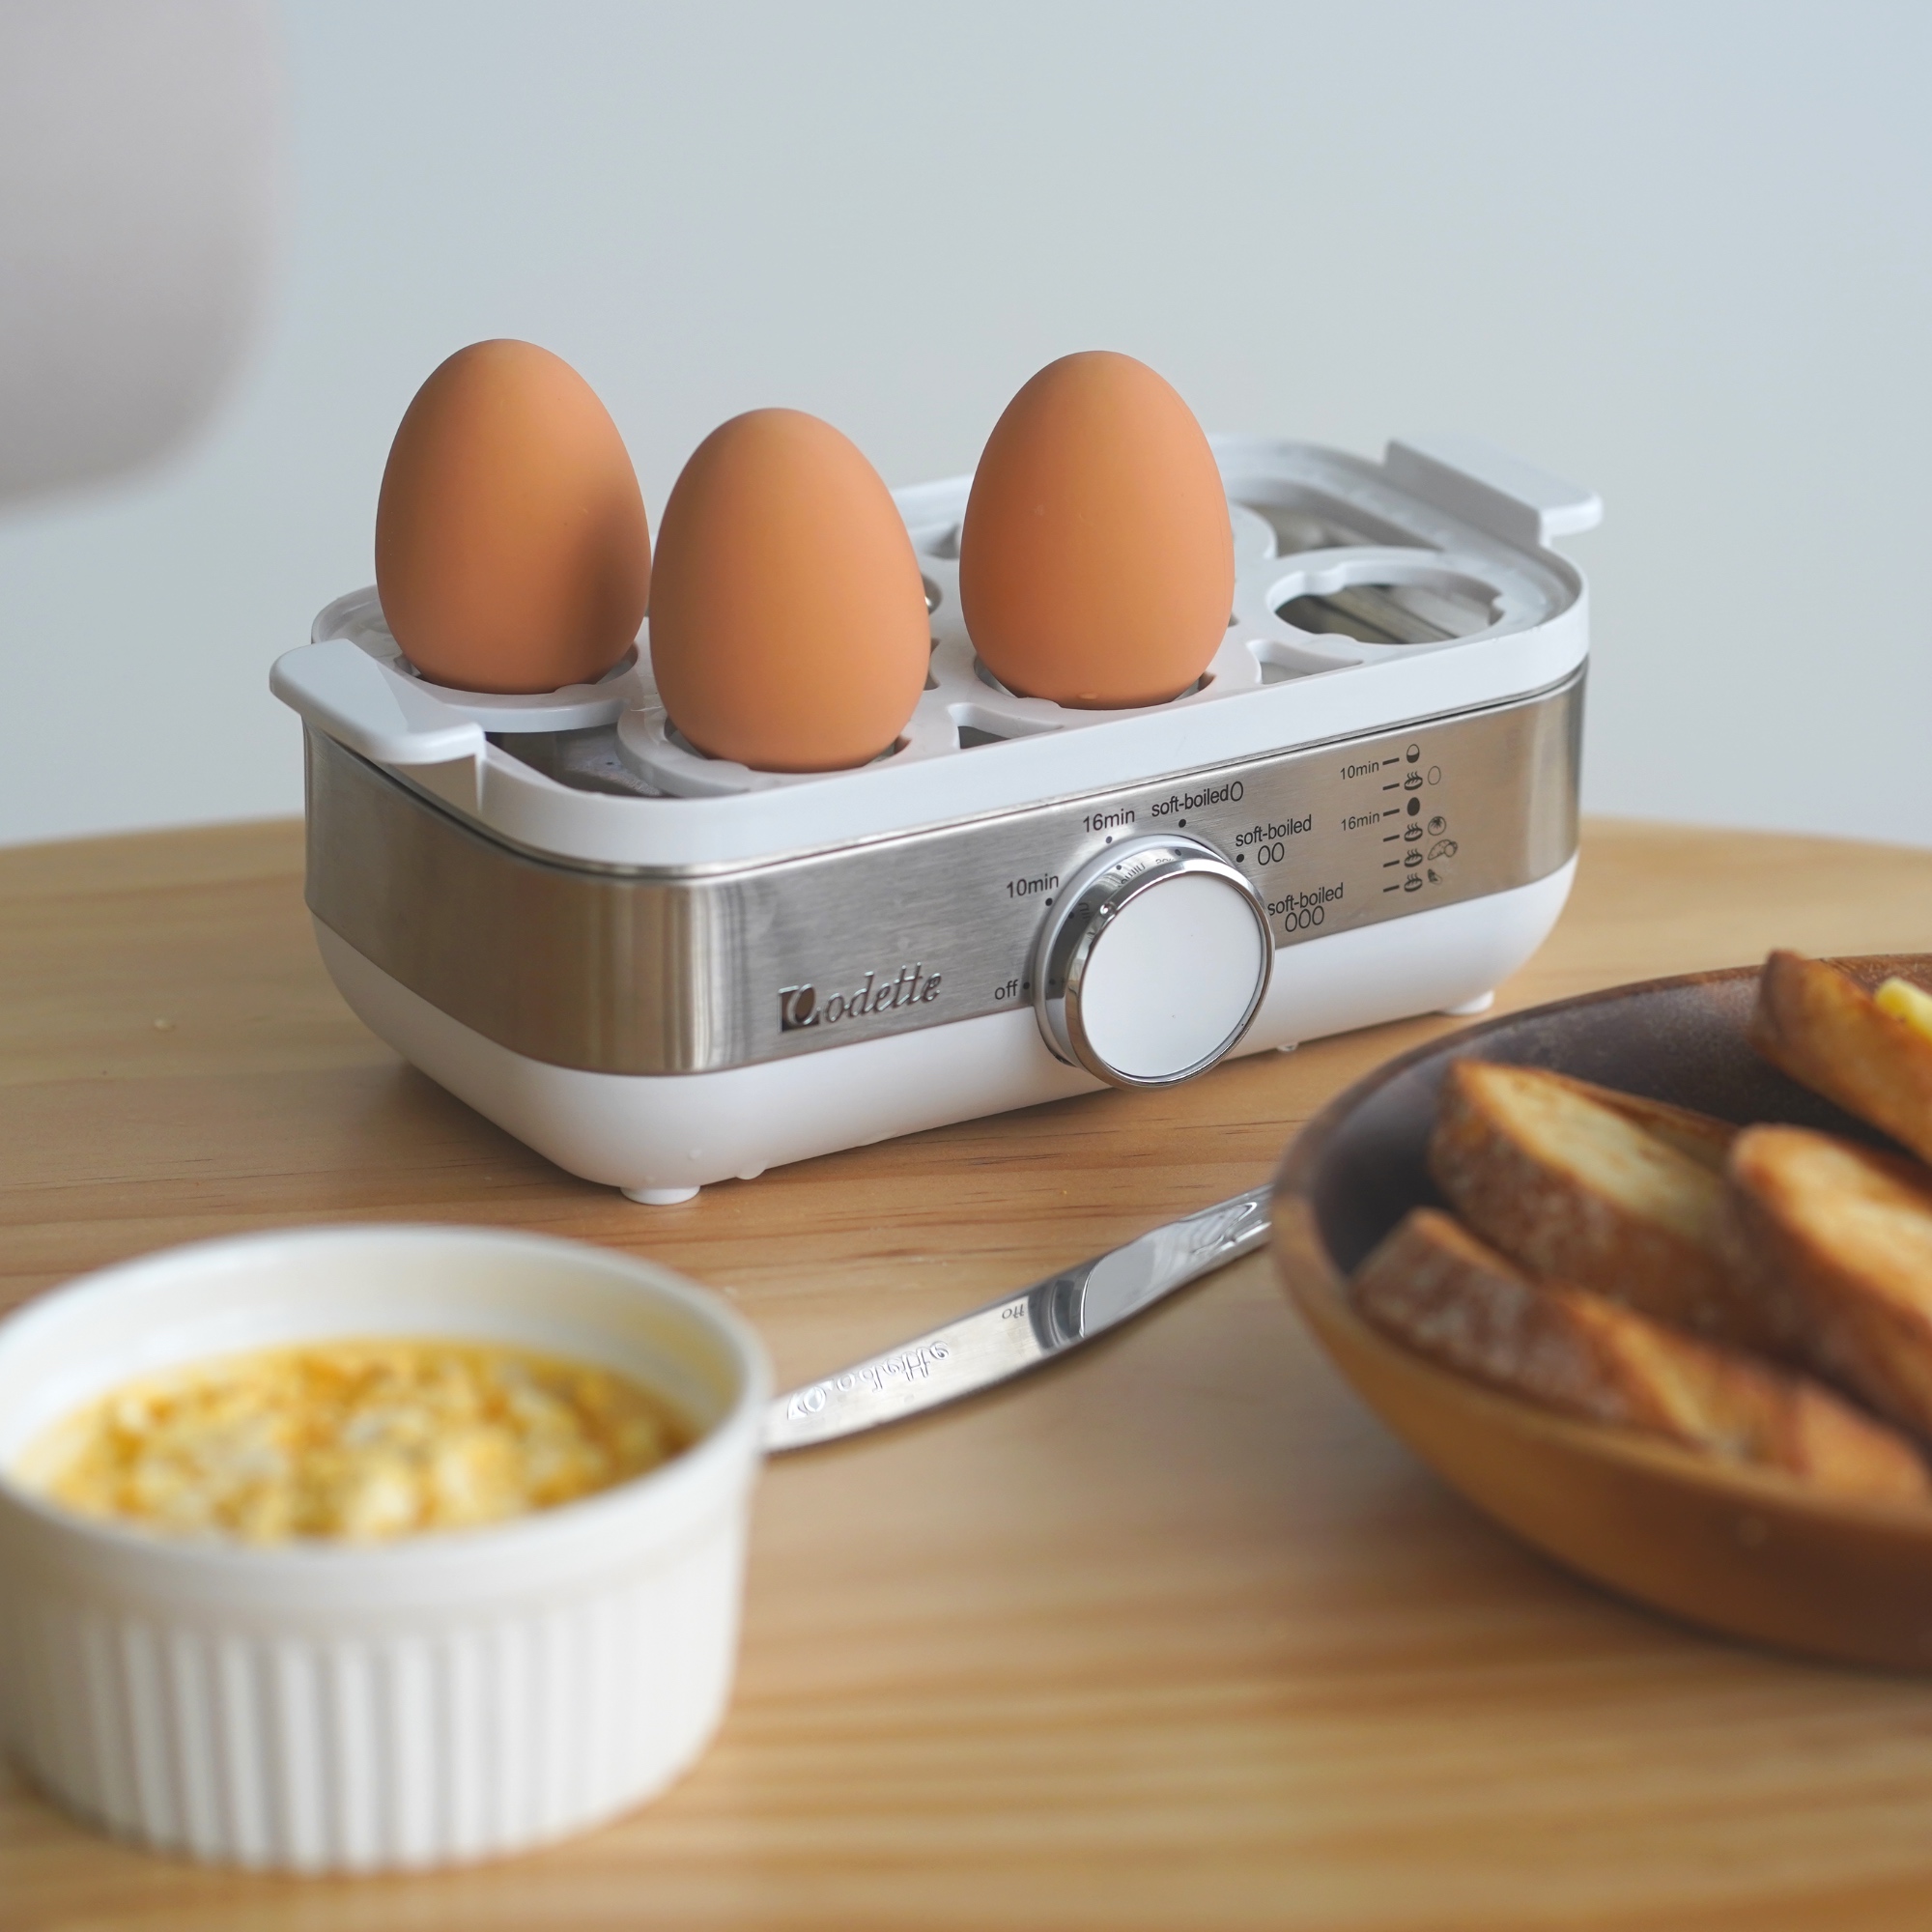 Odette Multifunctions Portable Steamer / Hard & Soft Boiled Egg Maker